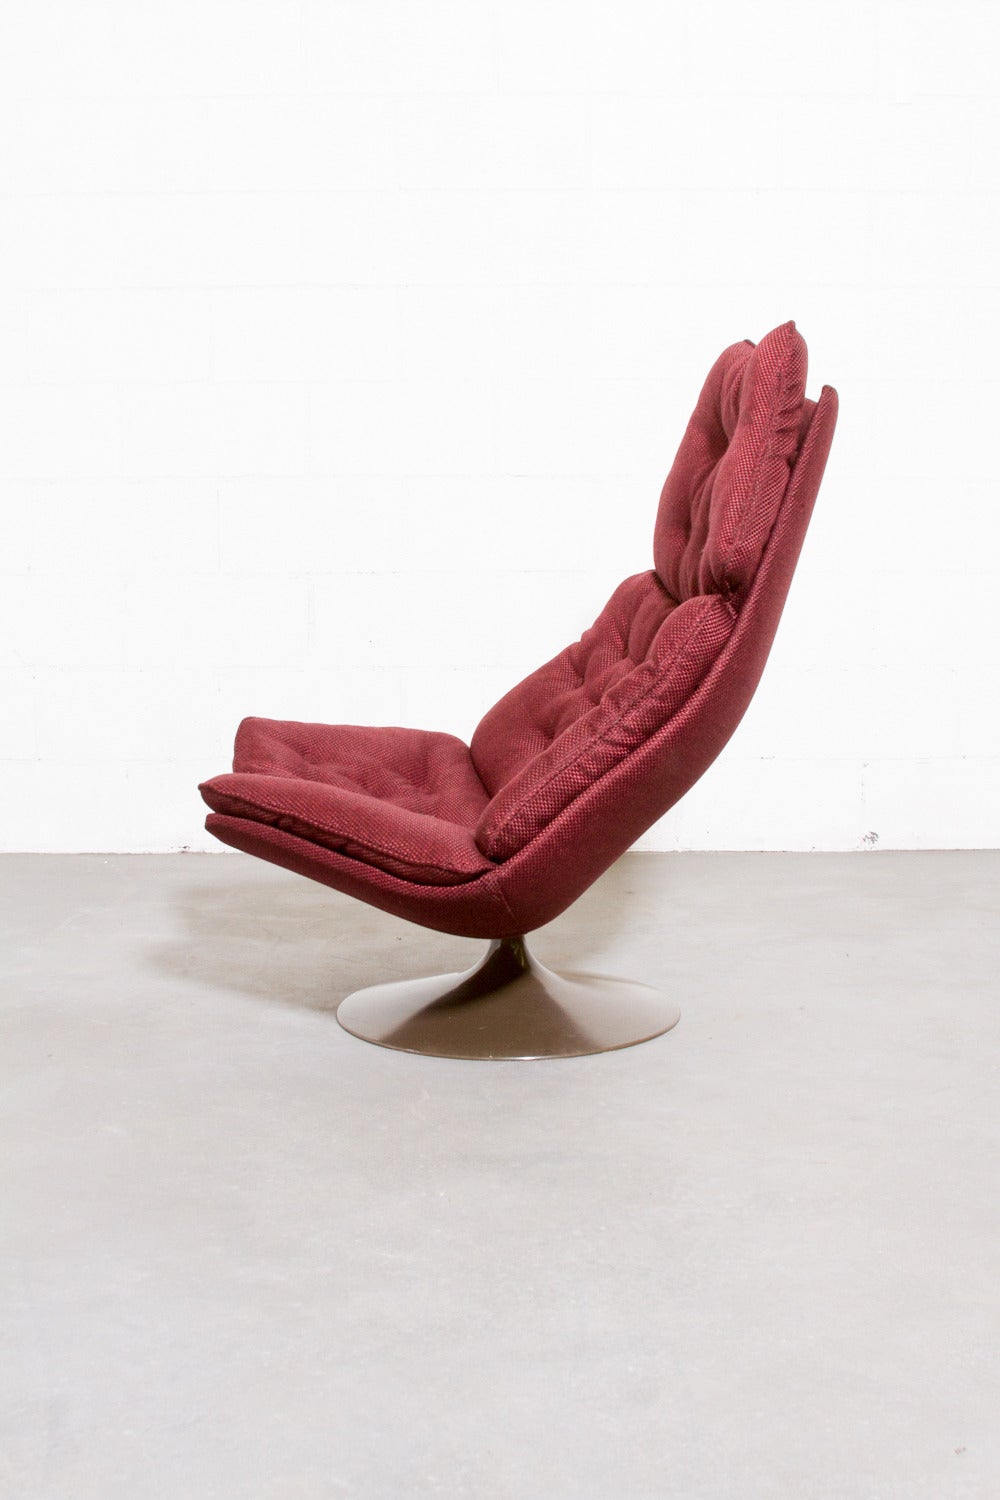 Mid-20th Century Geoffrey Harcourt F584 Swivel Lounge Chair for Artifort